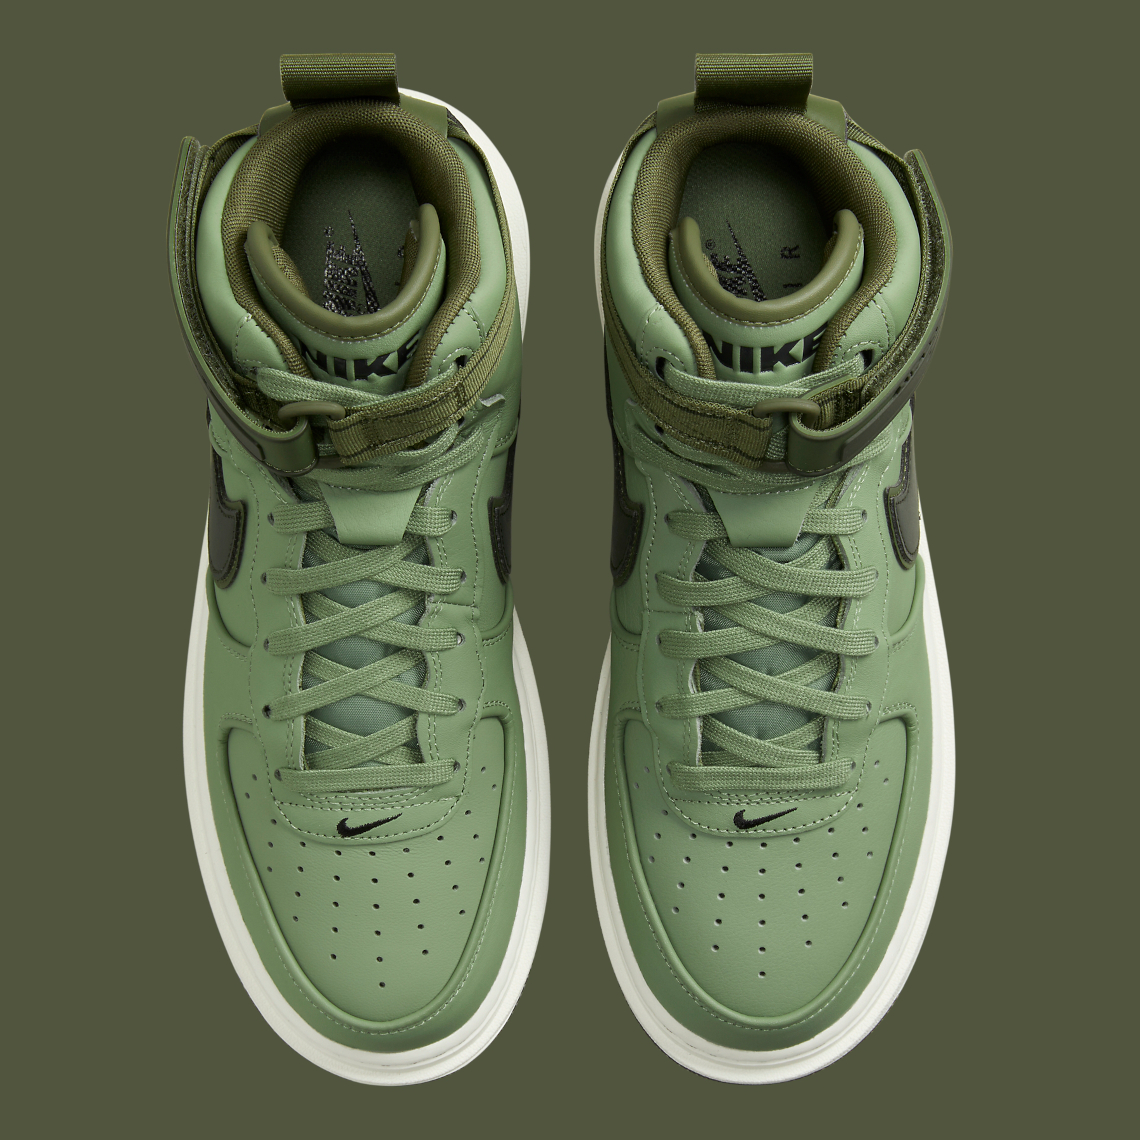 Nike Air Force 1 High Boot Military Green DA0418-300